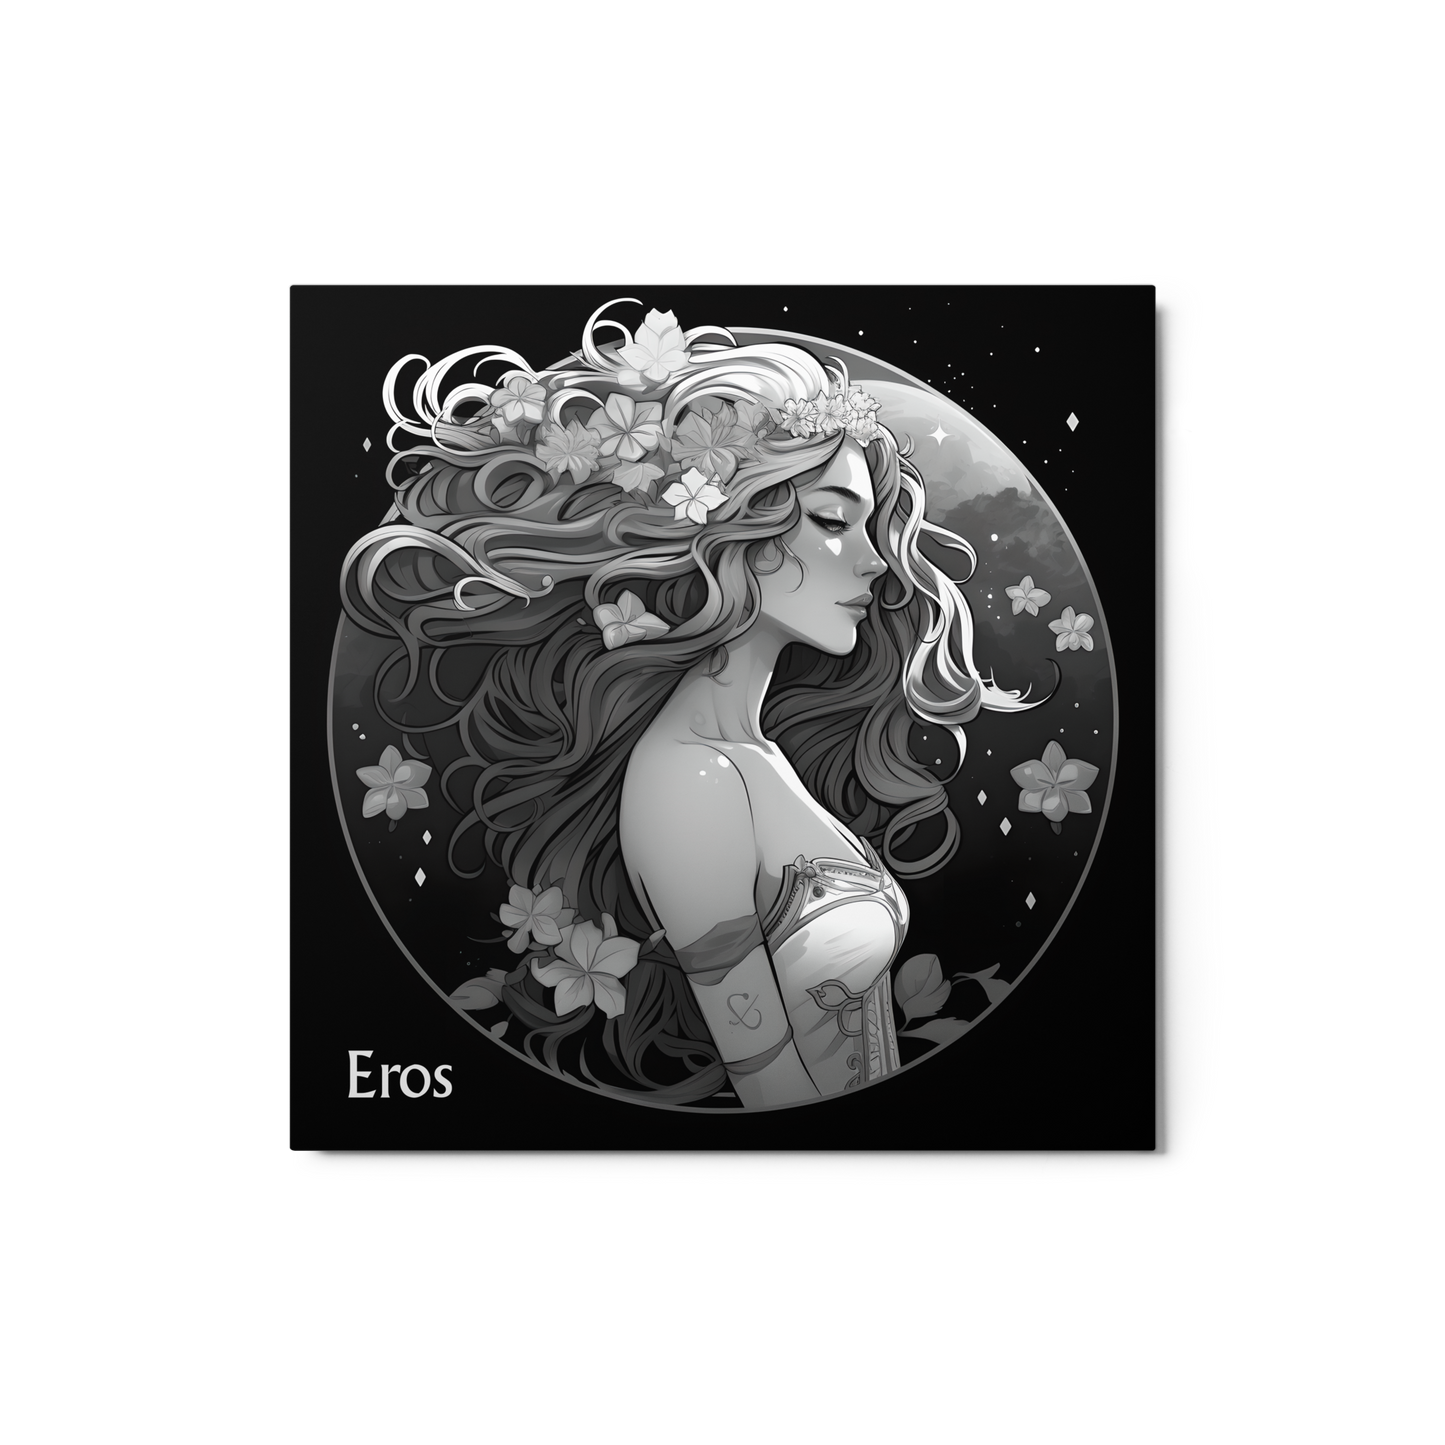 Eros' Desire - Black and White Hanging Wall Art High Quality Metal Print DrawDadDraw